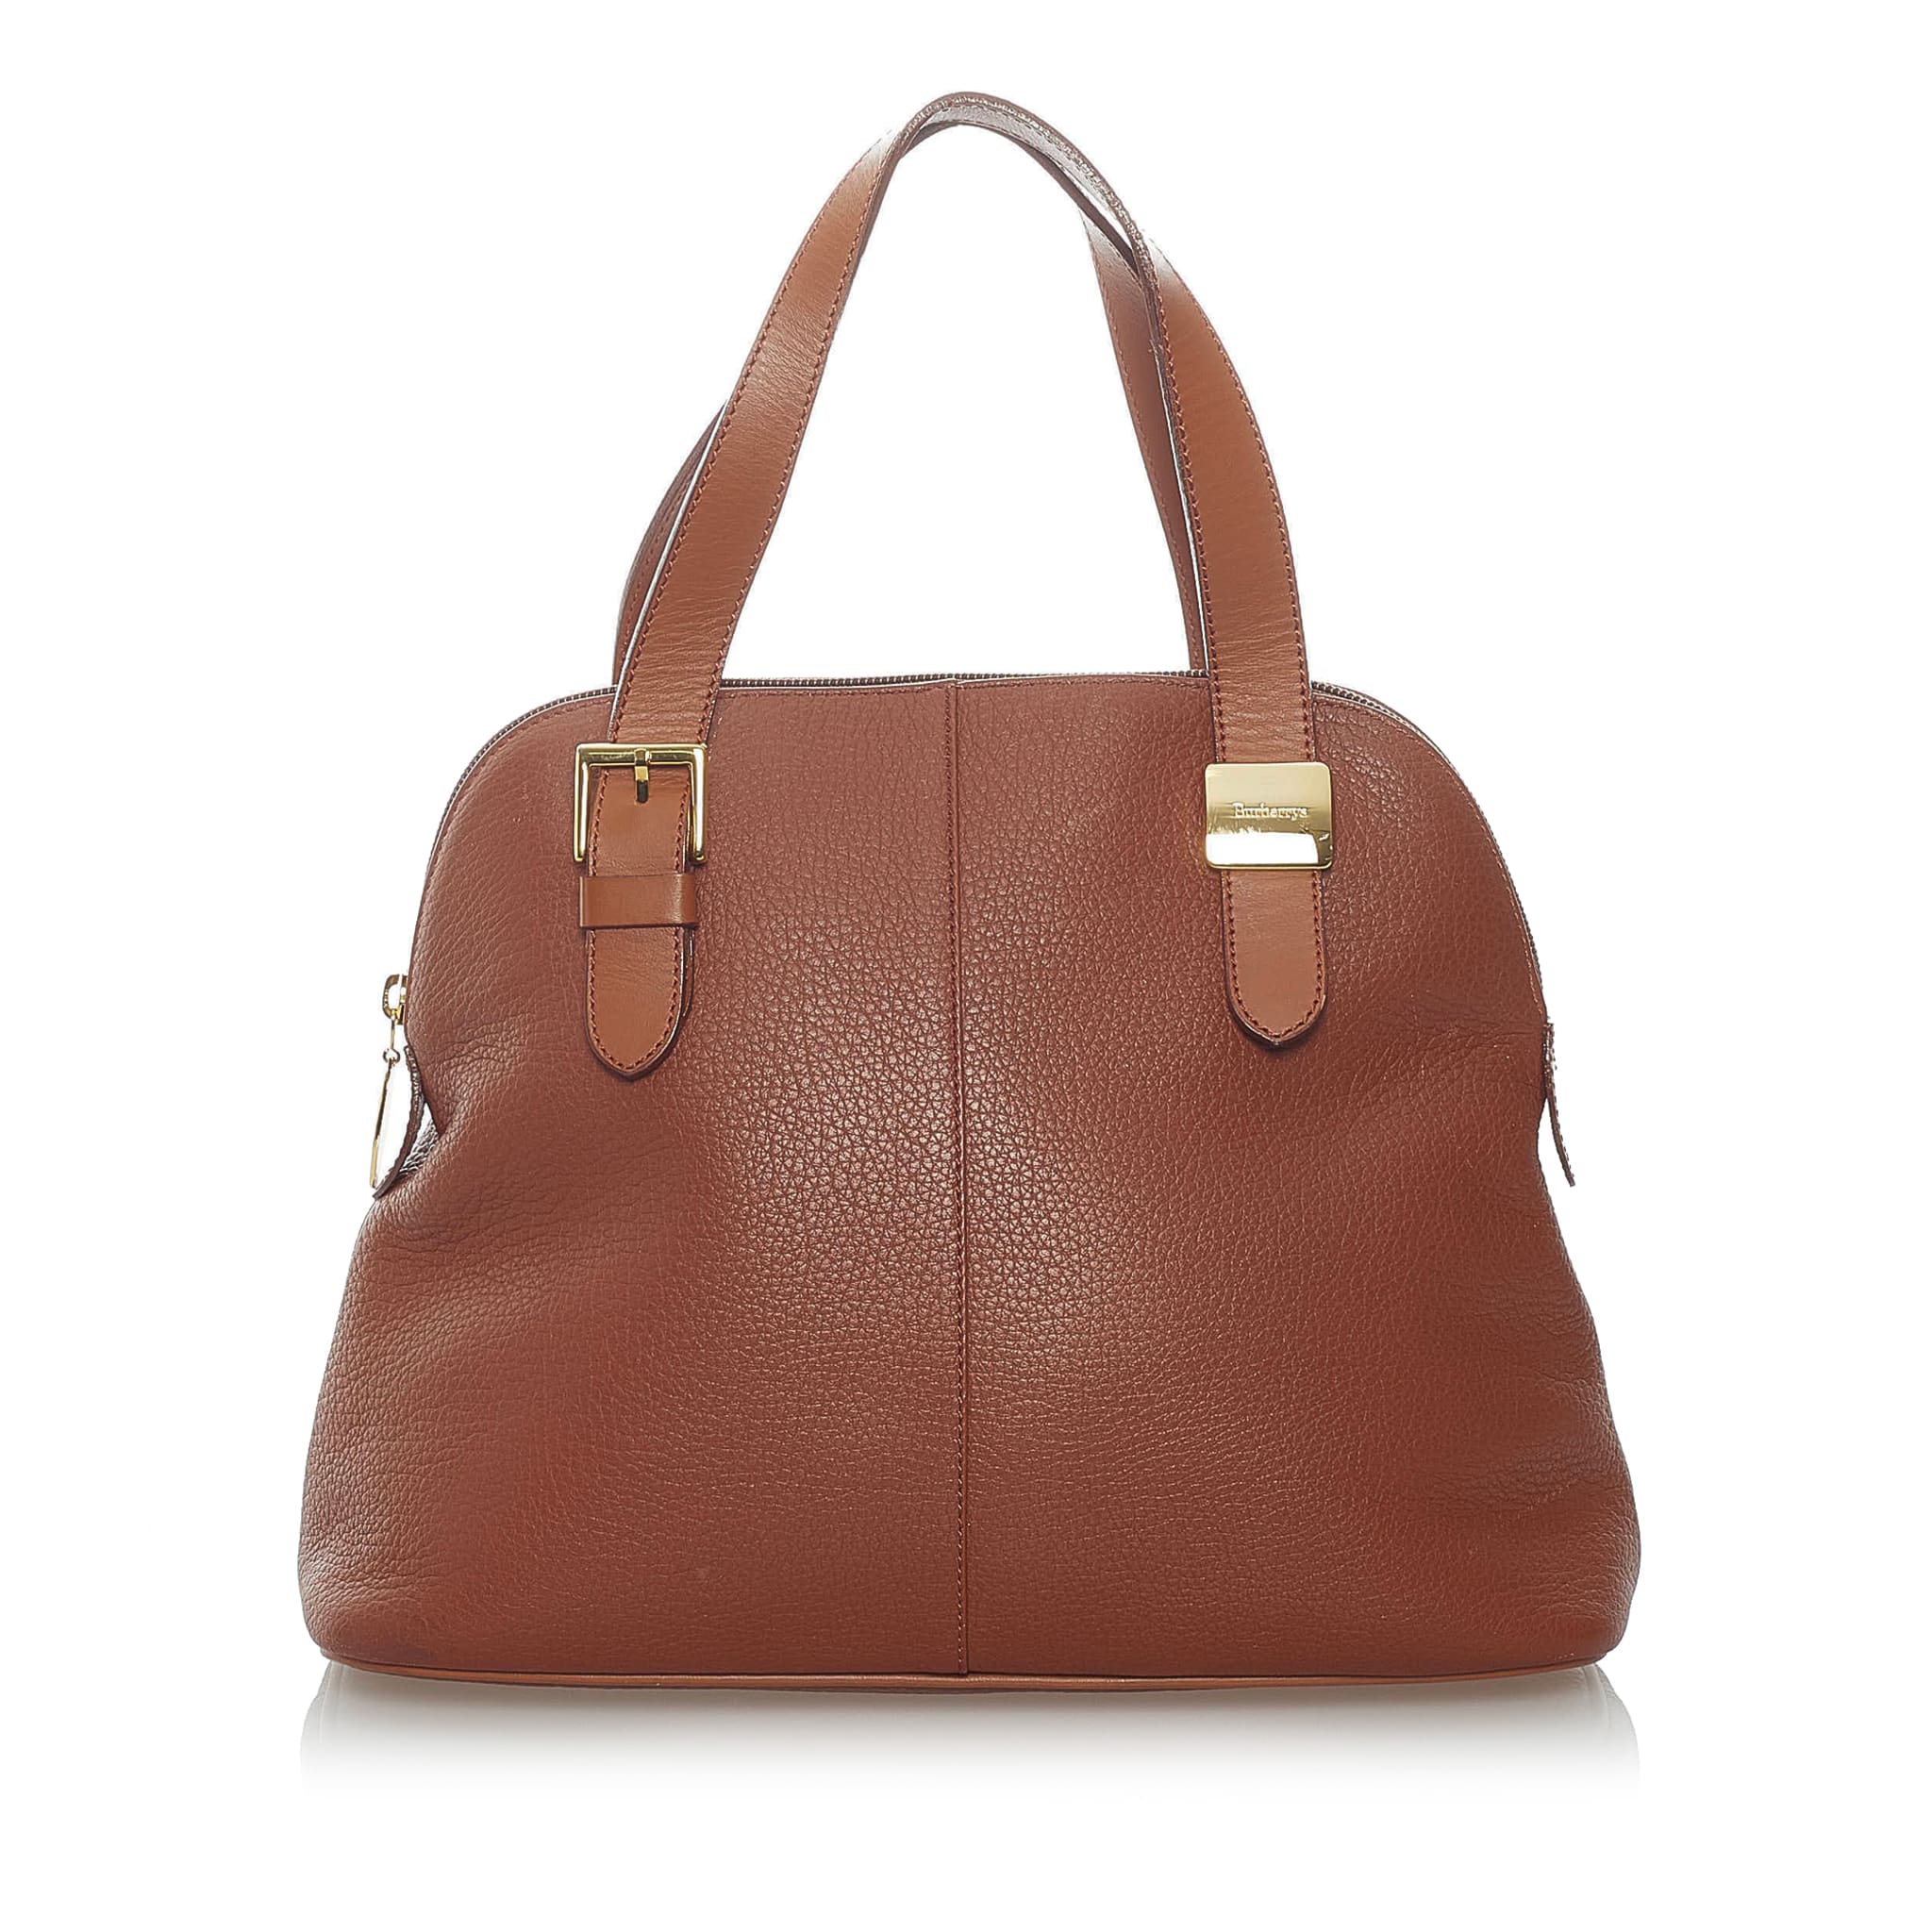 Burberry Leather Handbag, ONESIZE, brown